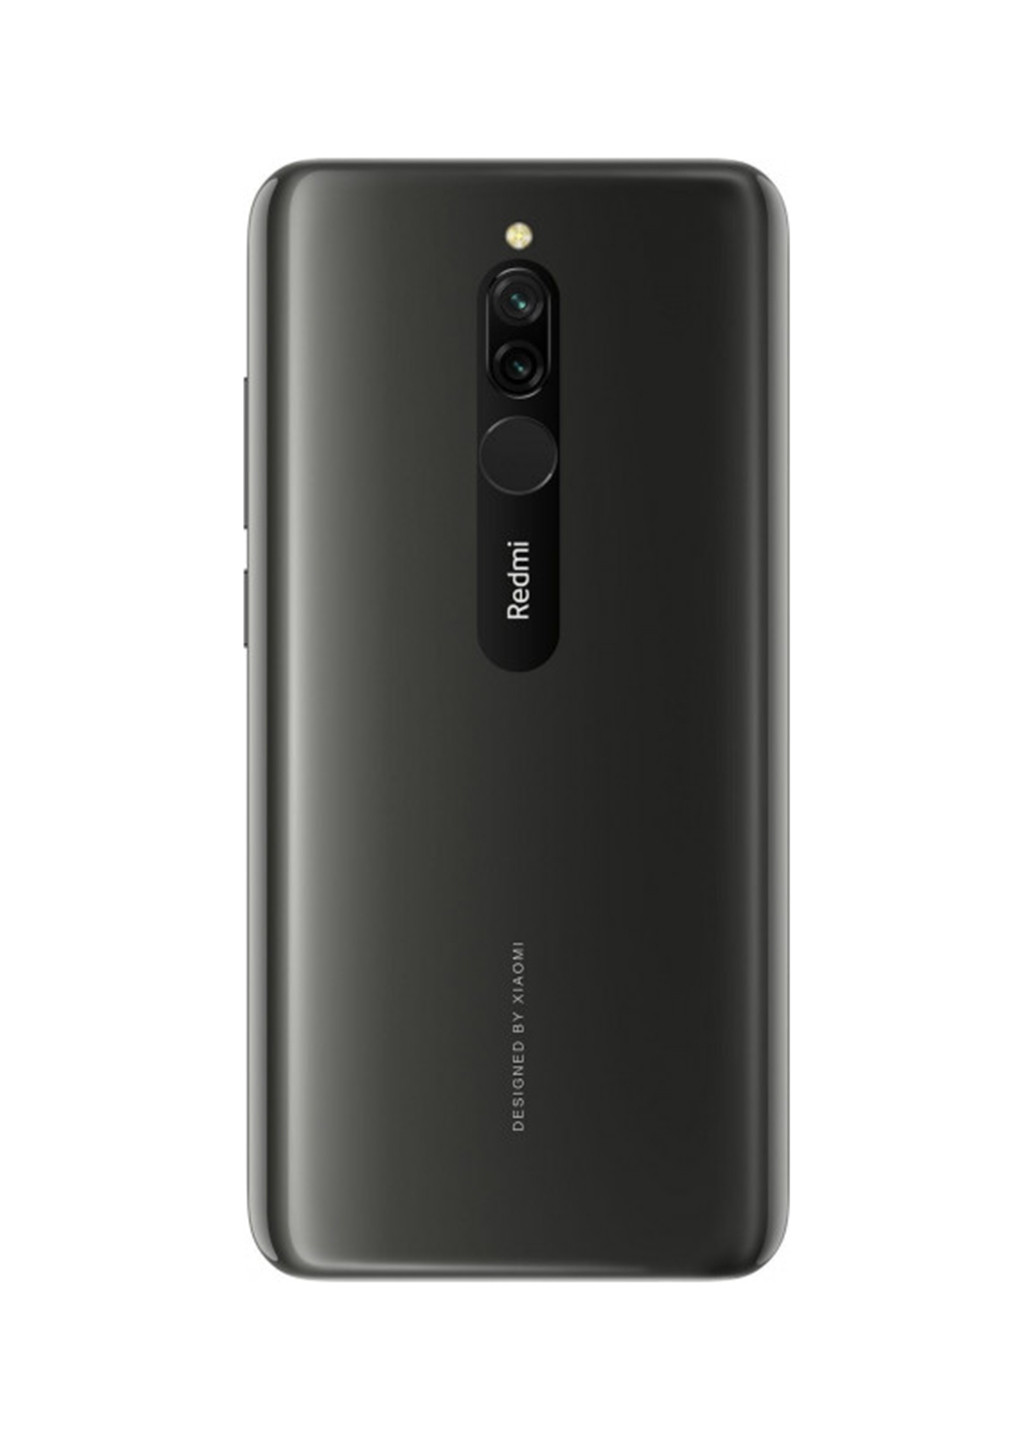 Смартфон Xiaomi redmi 8 4/64gb onyx black (155433459)